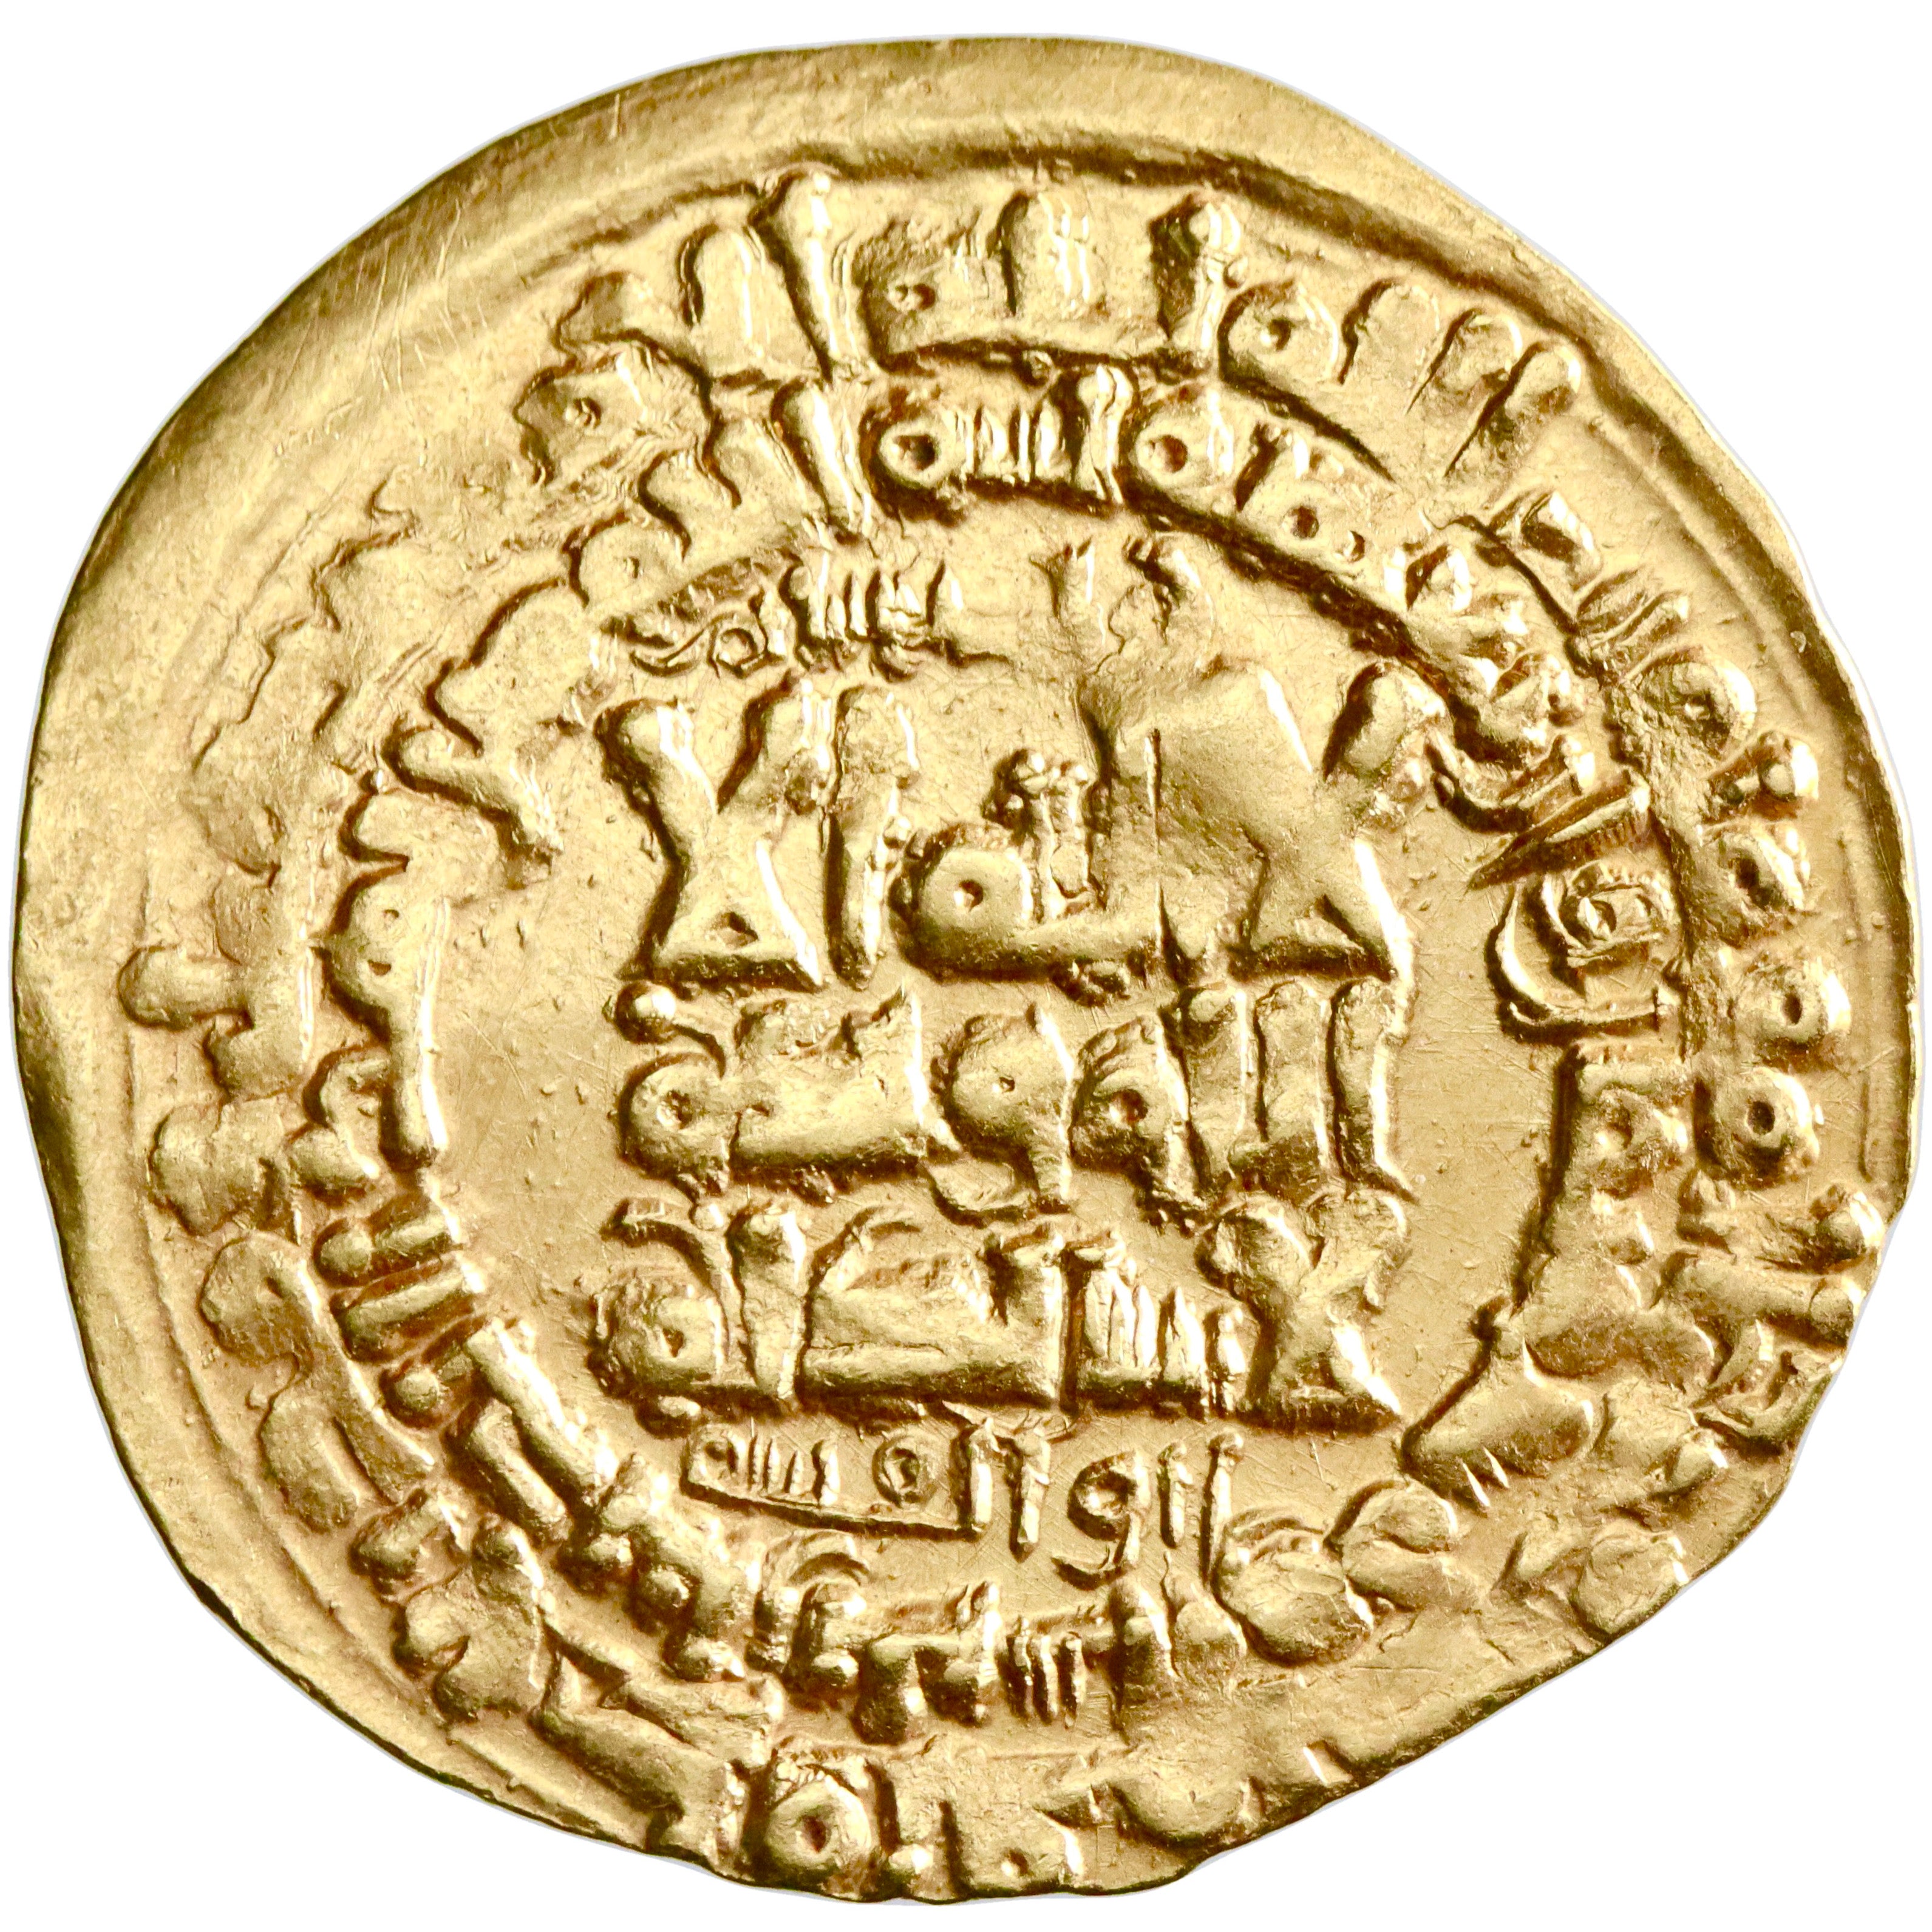 Ghaznavid, Mahmud ibn Sebuktegin, gold dinar, Naysabur (Nishapur) mint, AH 408, citing al-Qadir and al-Ghalib